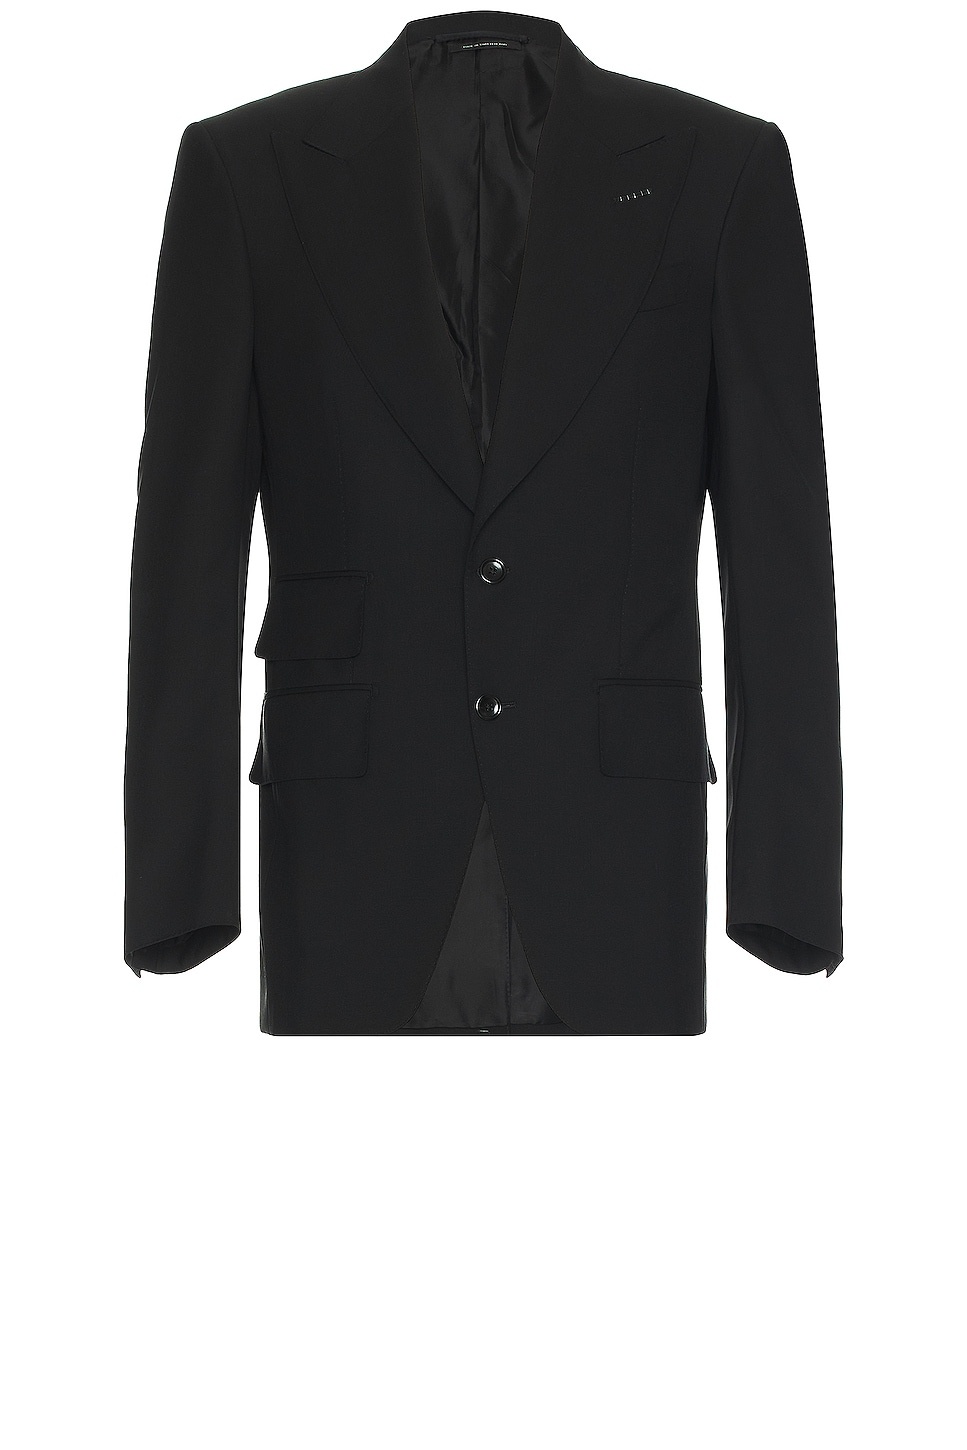 Atticus Plain Weave Suit - 2